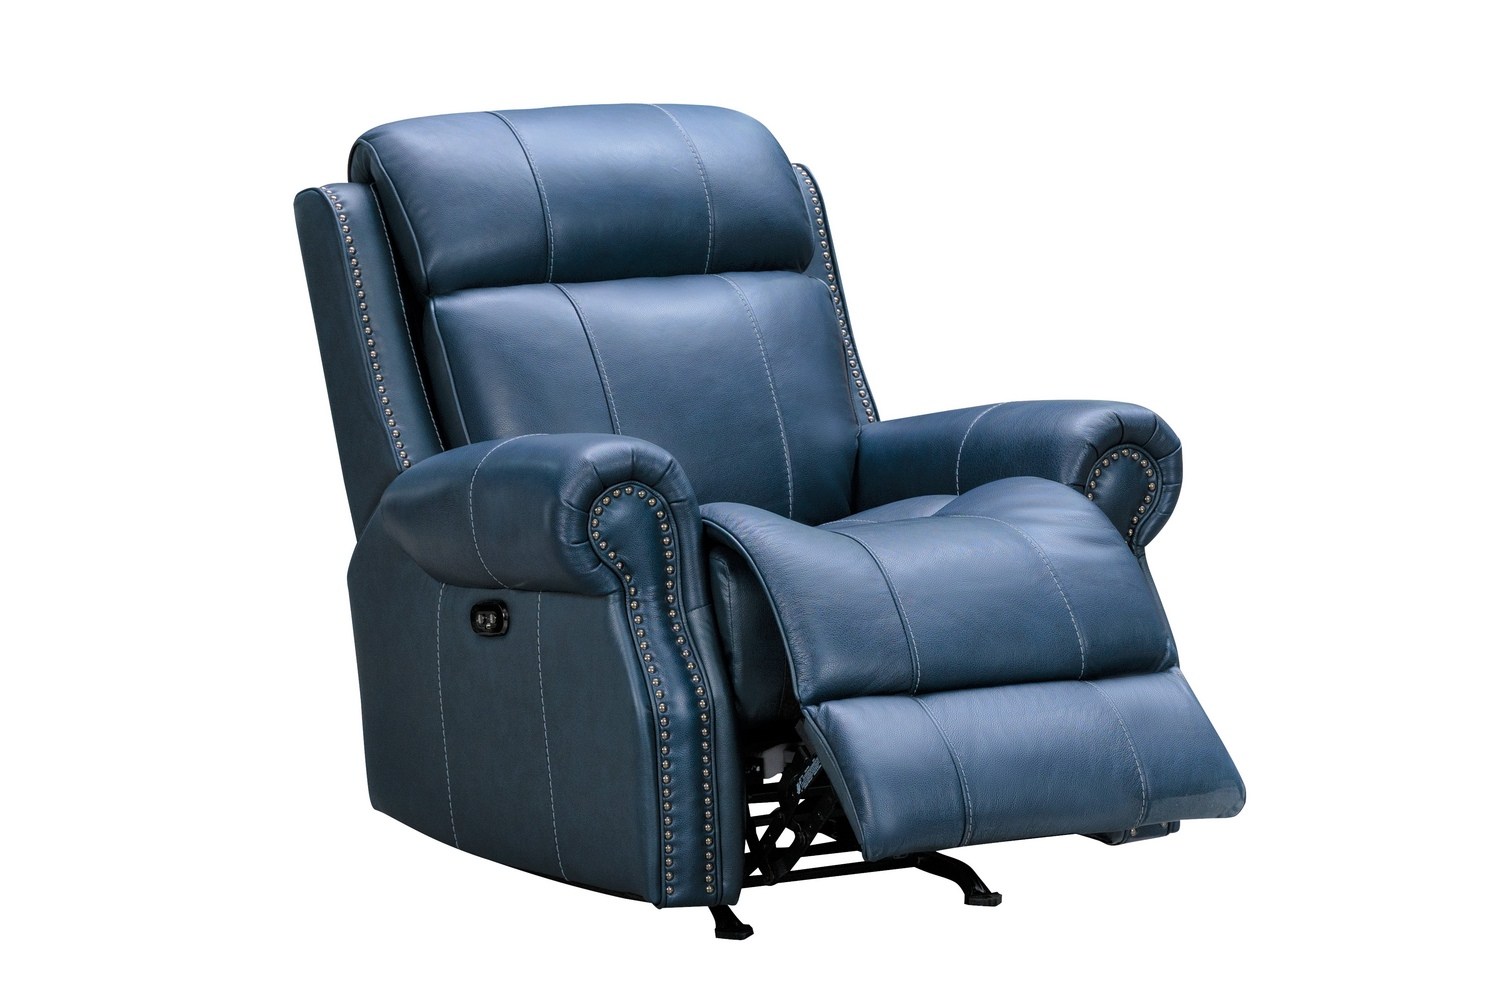 Barcalounger Demara Rocker Recliner Chair with Power and Power Head Rest - Marco Navy Blue/Leather match